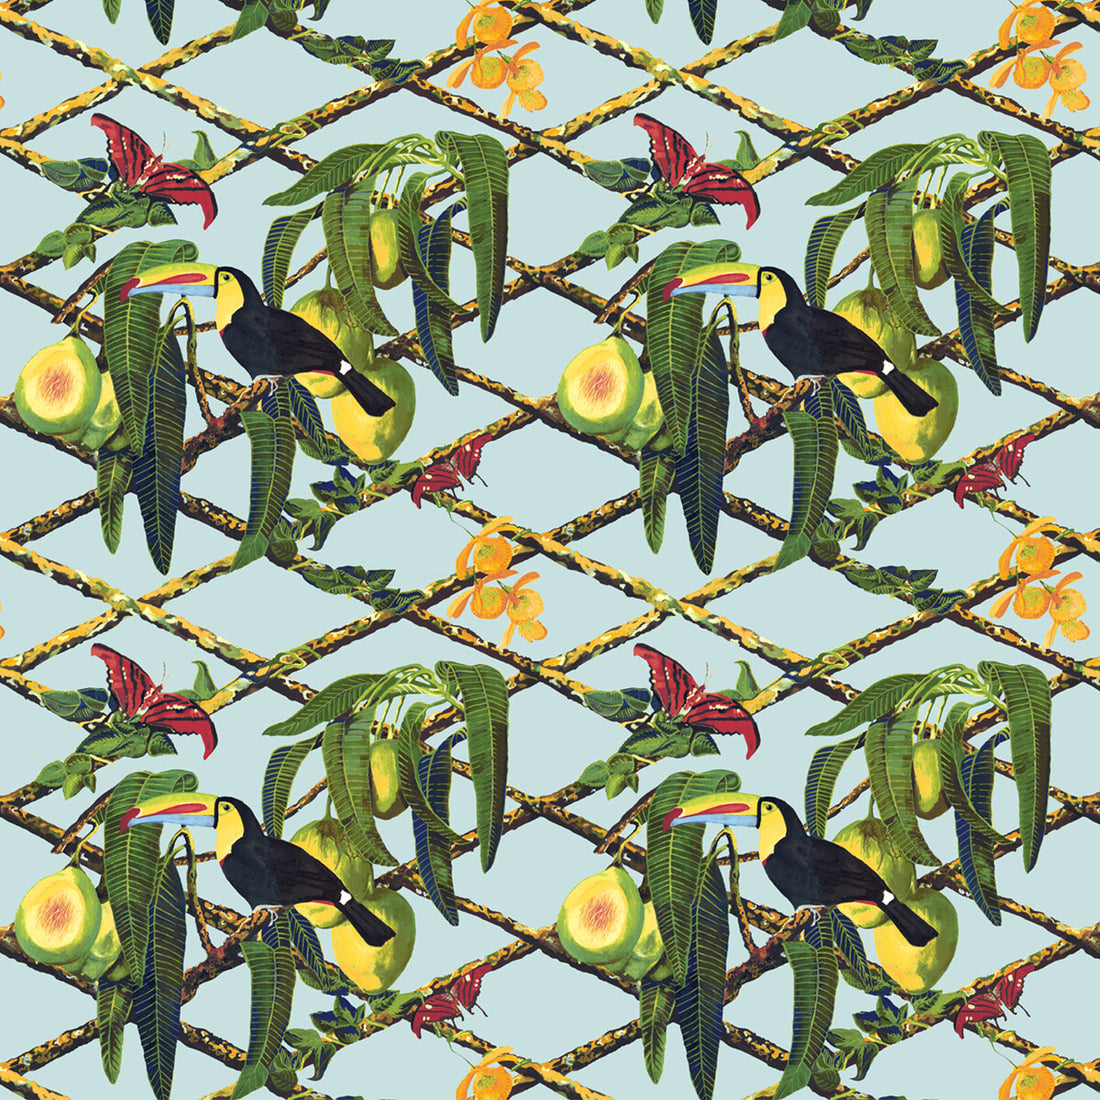 Tucan fabric in original color - pattern GDT5539.001.0 - by Gaston y Daniela in the Gaston Libreria collection